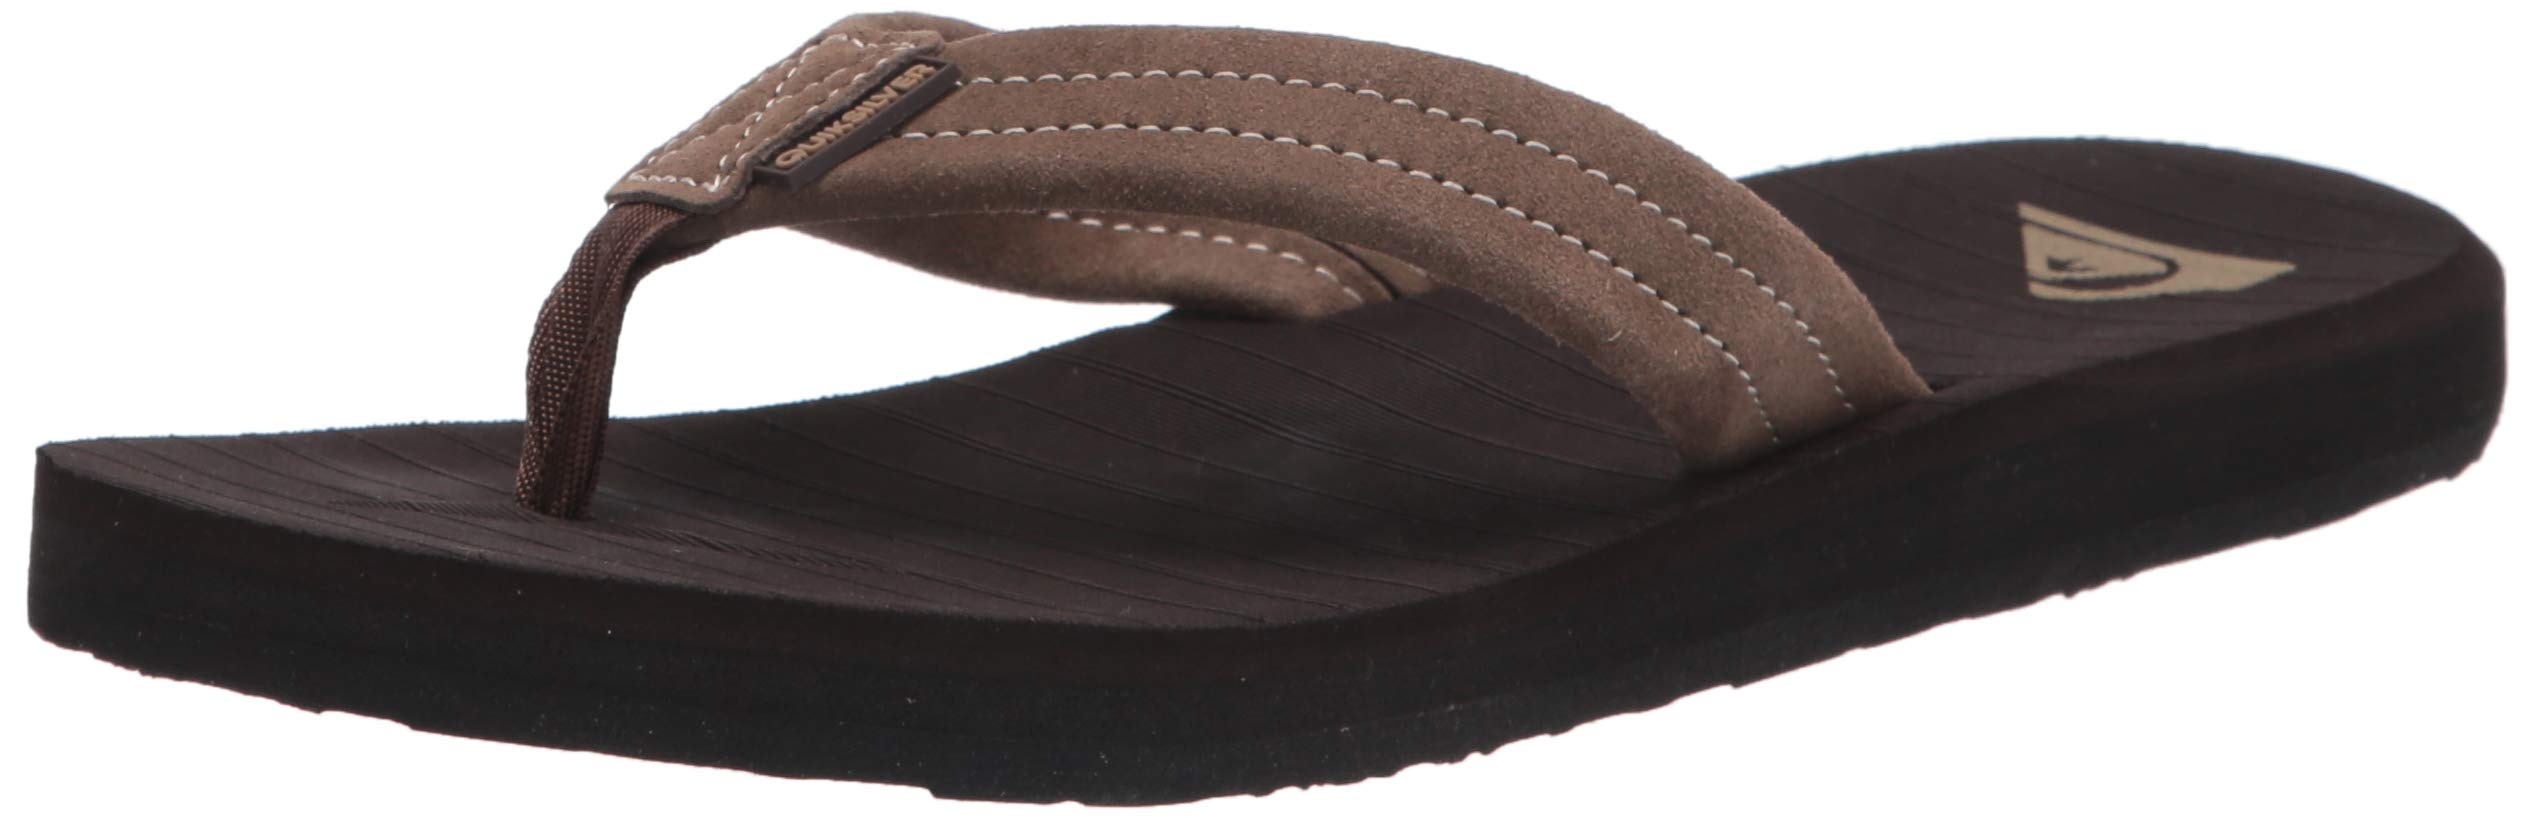 Quiksilver Men's Carver Suede 3 Point Flip Flop Athletic Sandal, Demitasse Solid, 9 M US